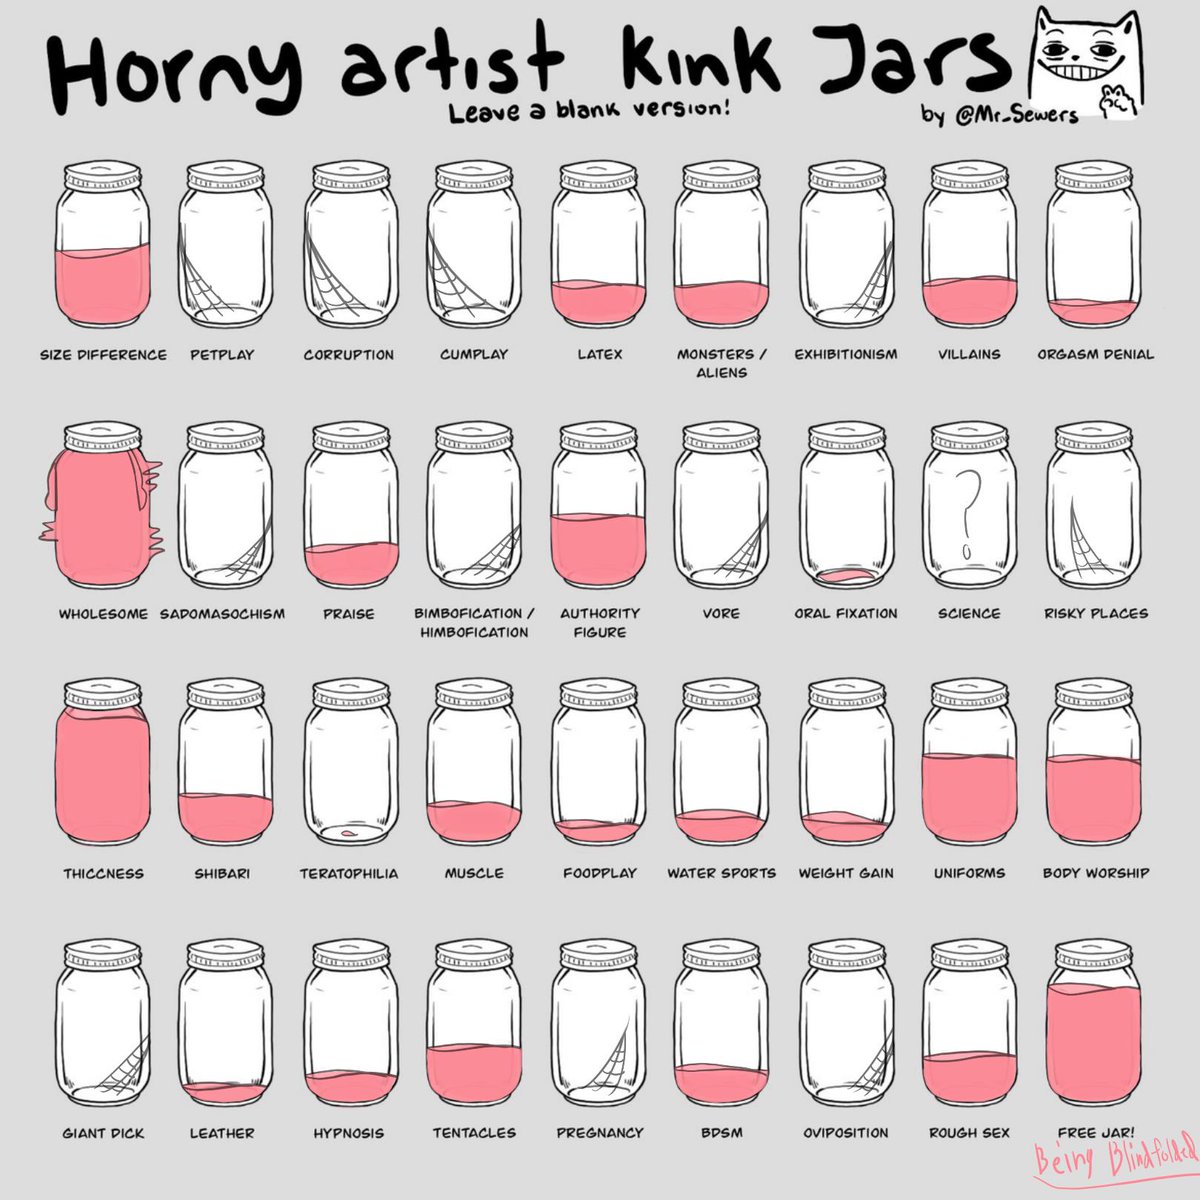 Horny artist kink jar